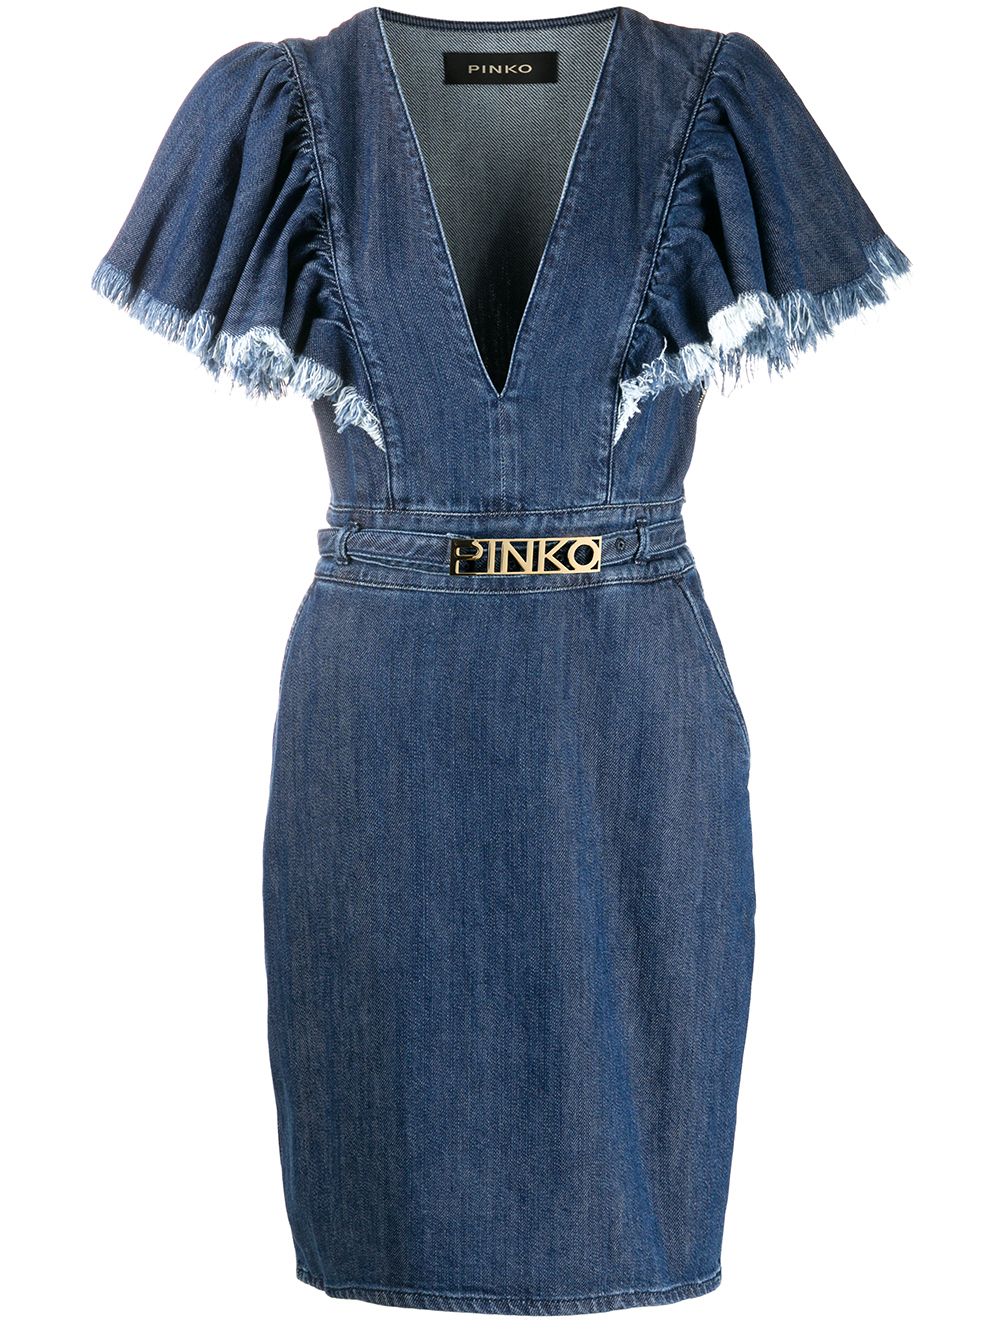 фото Pinko джинсовое платье с бахромой на рукавах